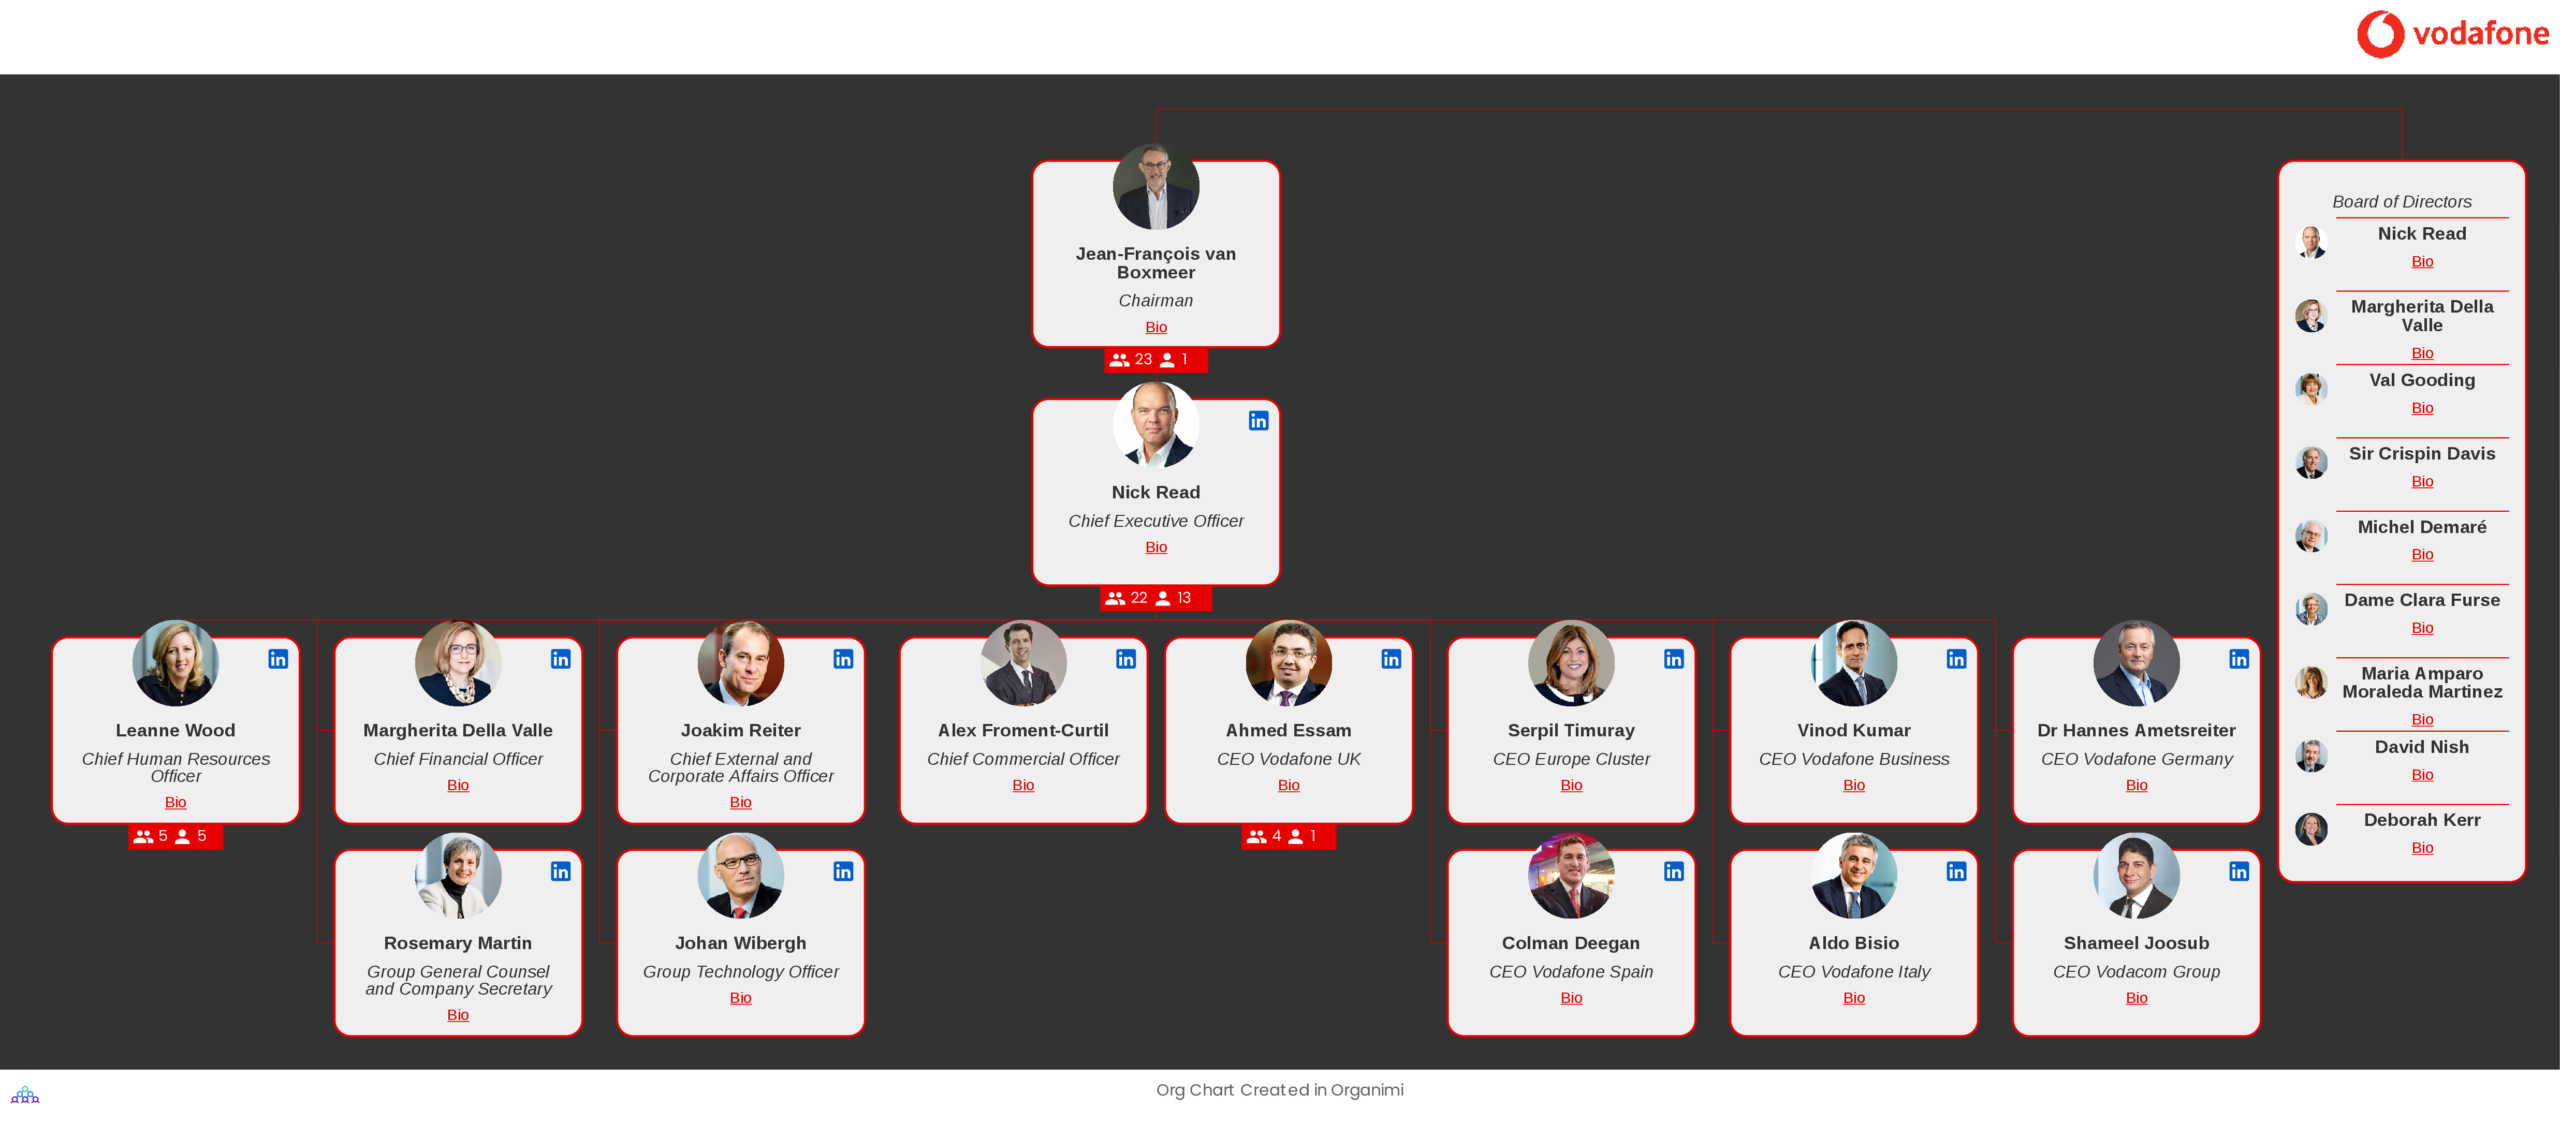 Vodafone's Corporate Organizational Structure